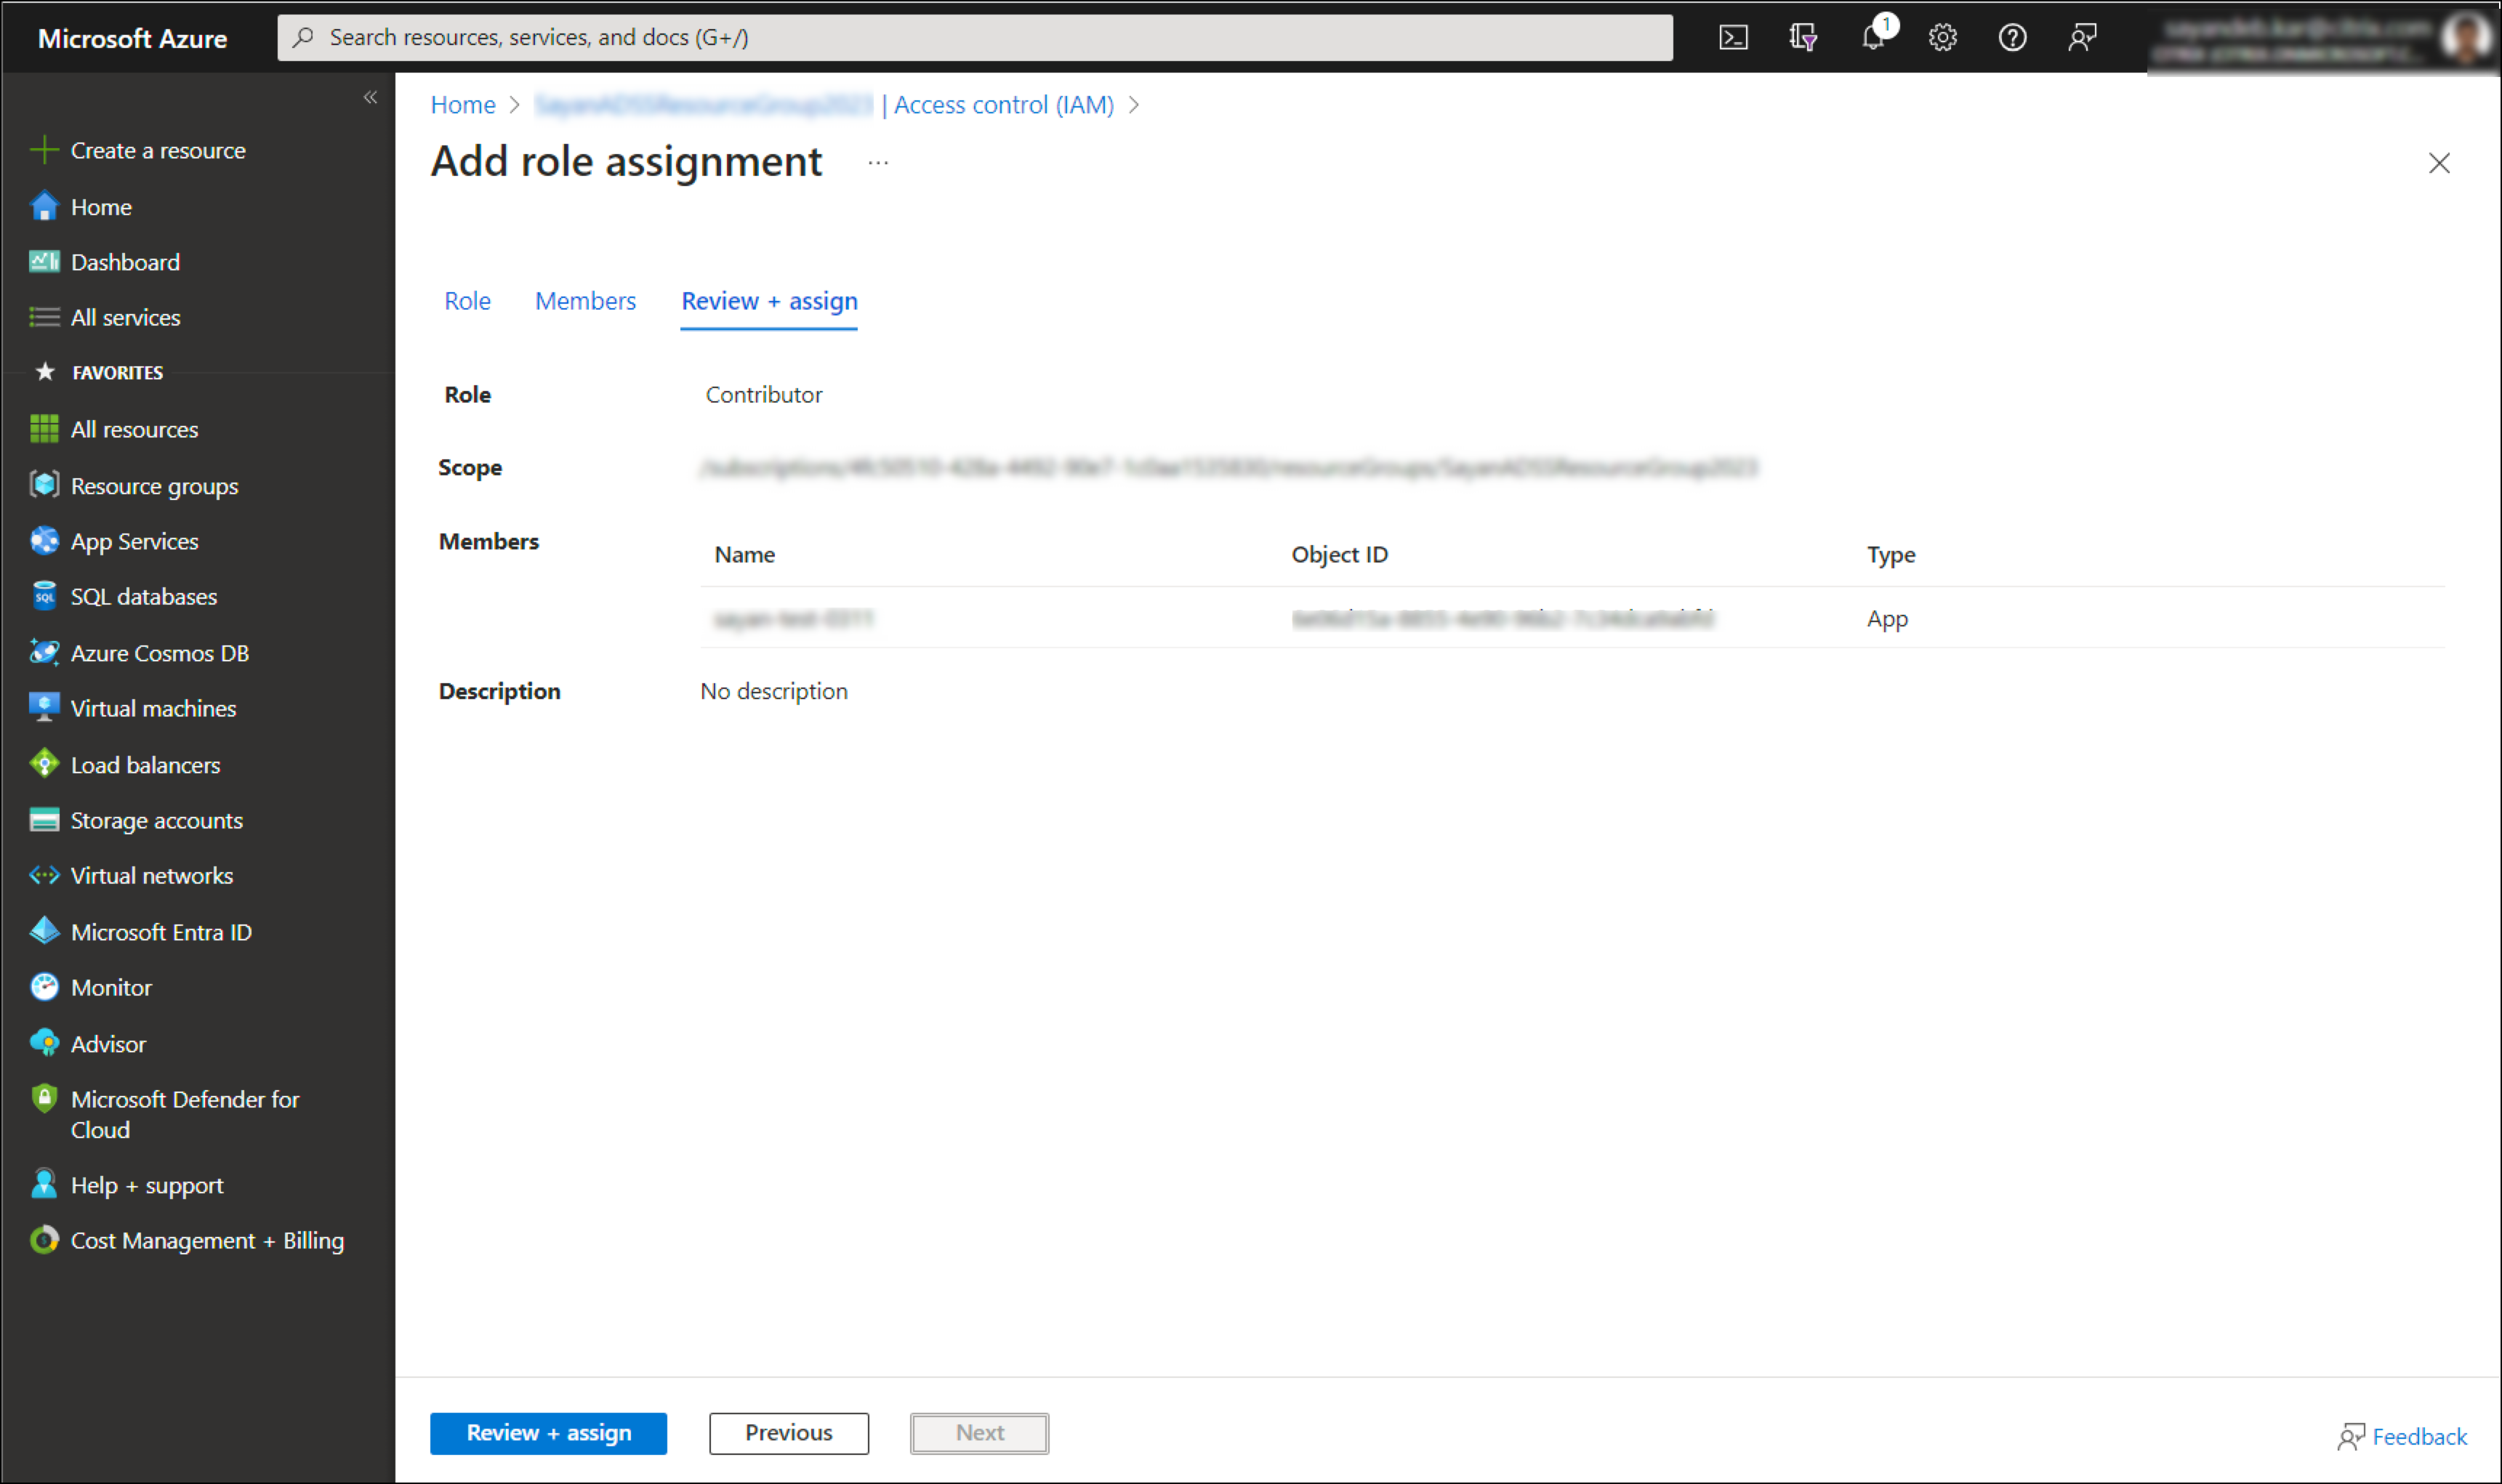 Assign role permission in Microsoft Azure